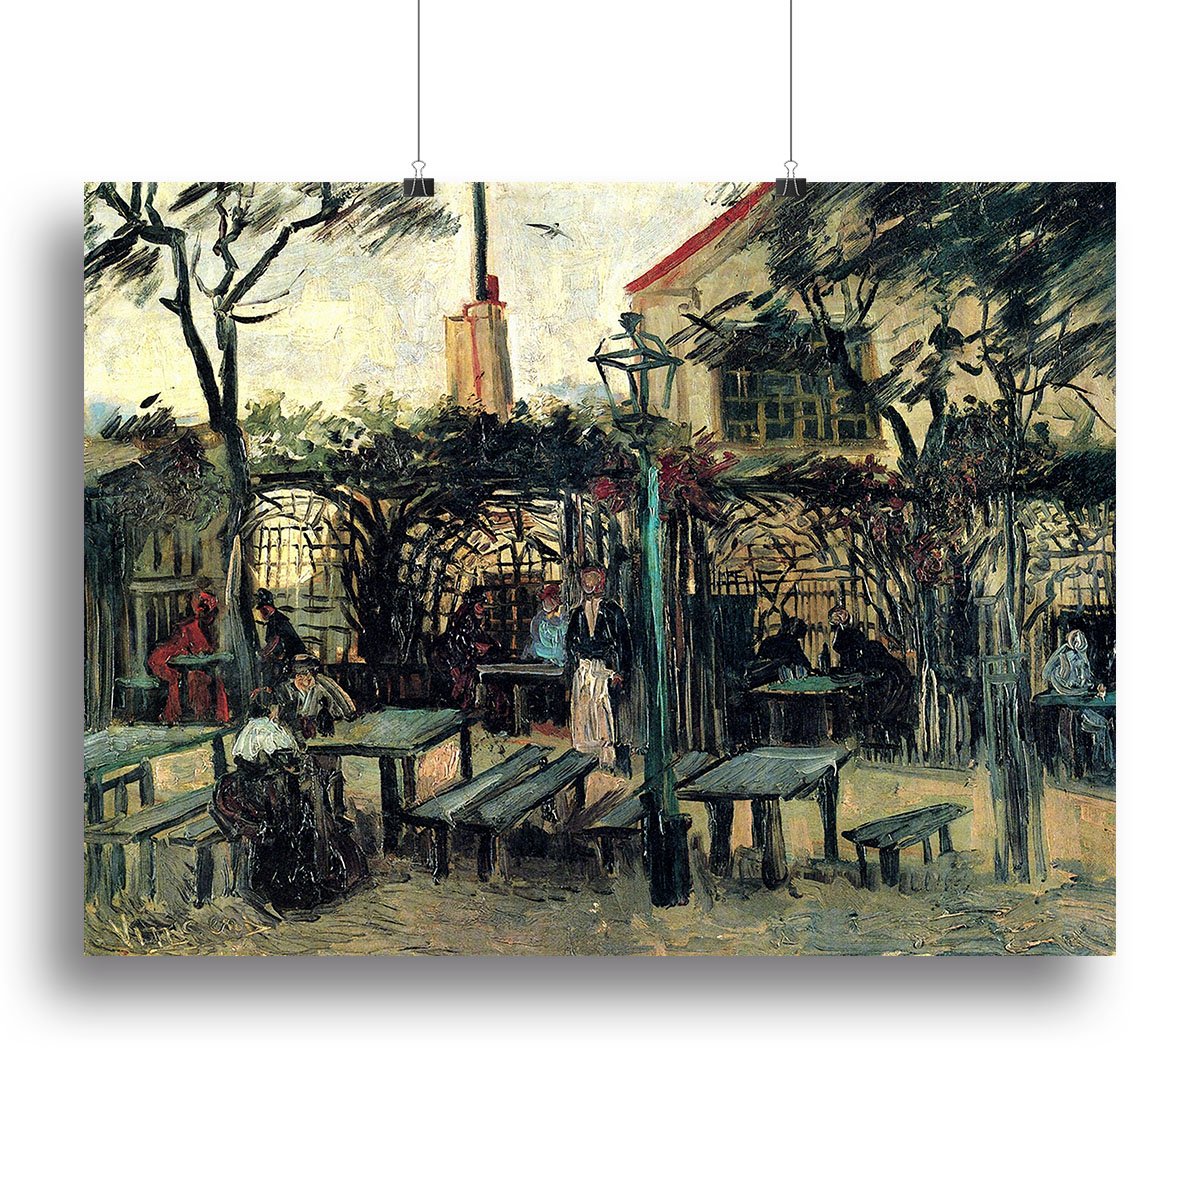 Terrace of a Cafe on Montmartre La Guinguette1 by Van Gogh Canvas Print or Poster